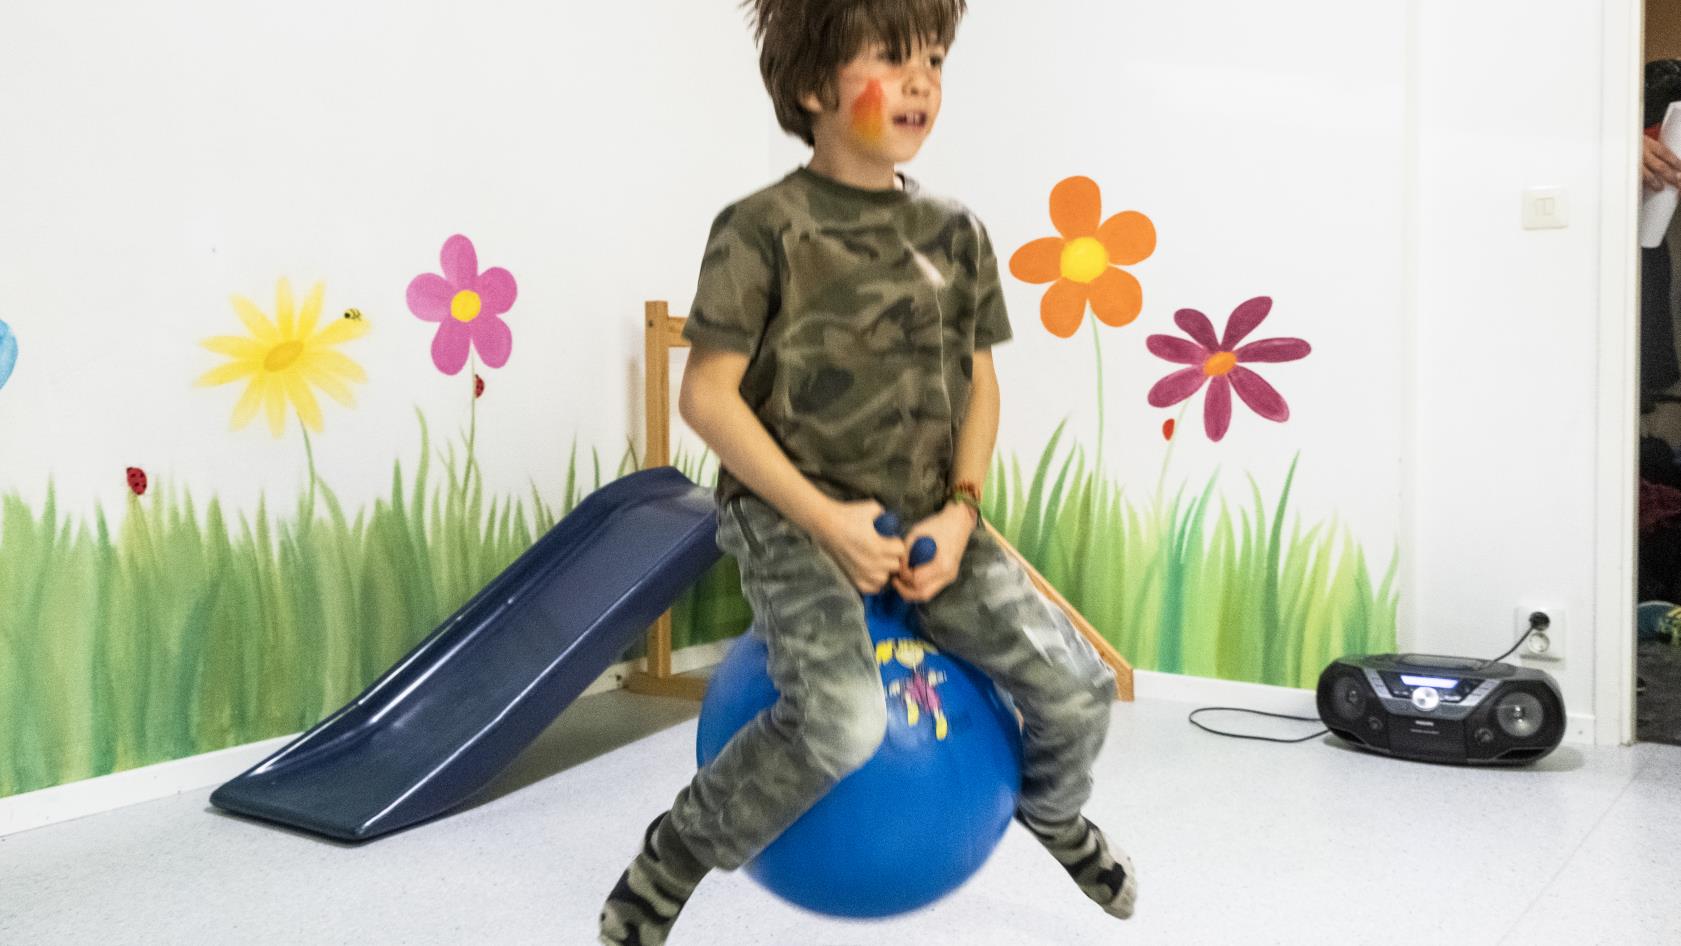 En pojke studsar runt i lekrummet på en blå hoppboll.